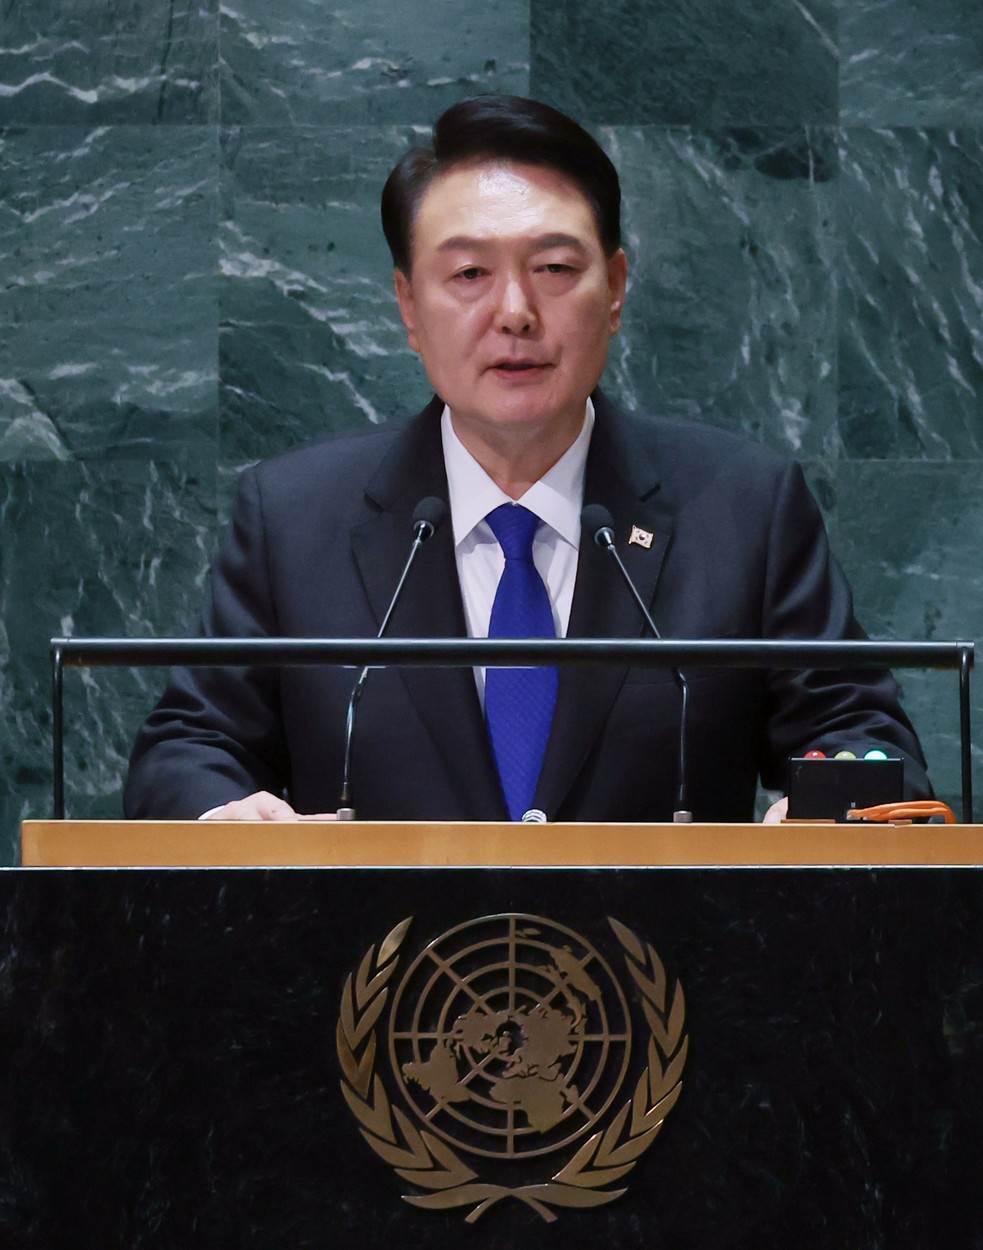  Južnokorejski predsjednik Yoon Suk Yeol u govoru pred Općon skupštinom UN-a 